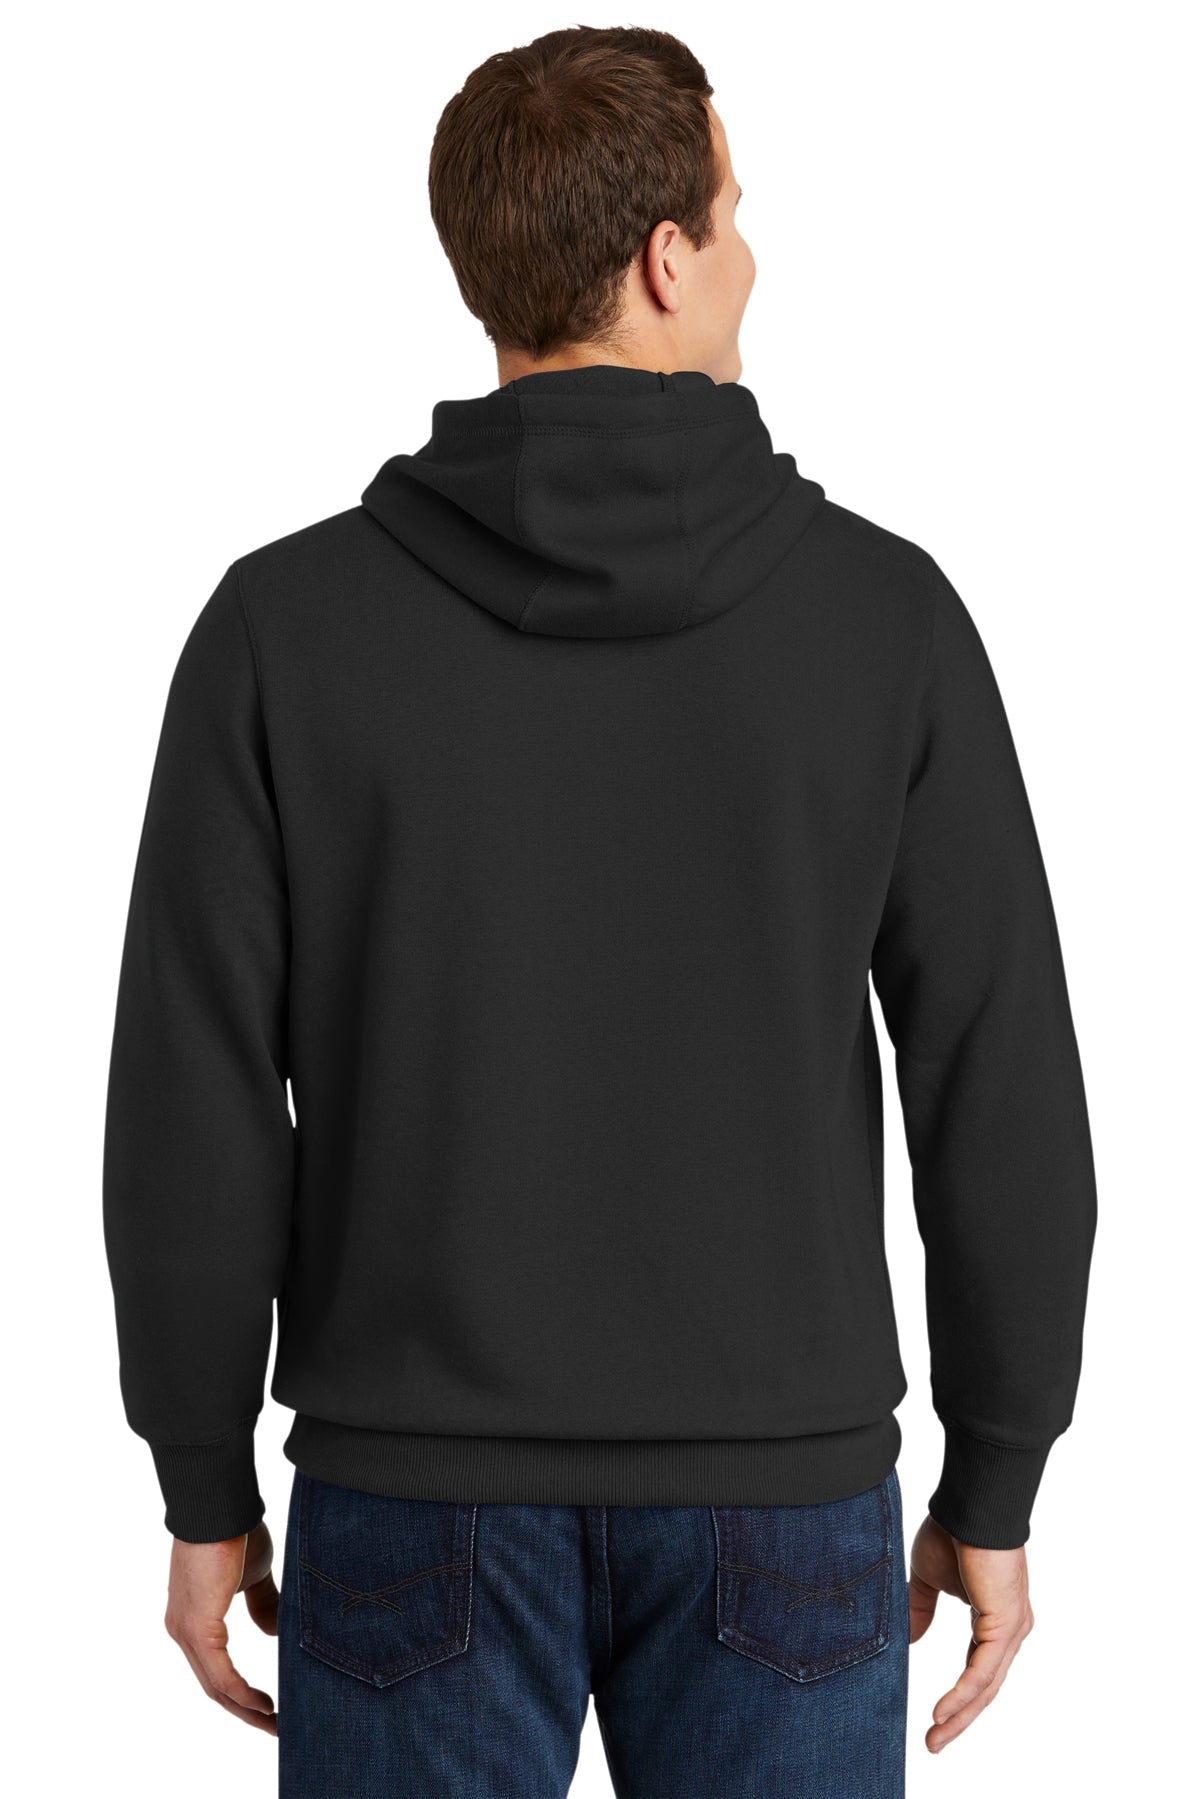 sport-tek_st254 _black_company_logo_sweatshirts